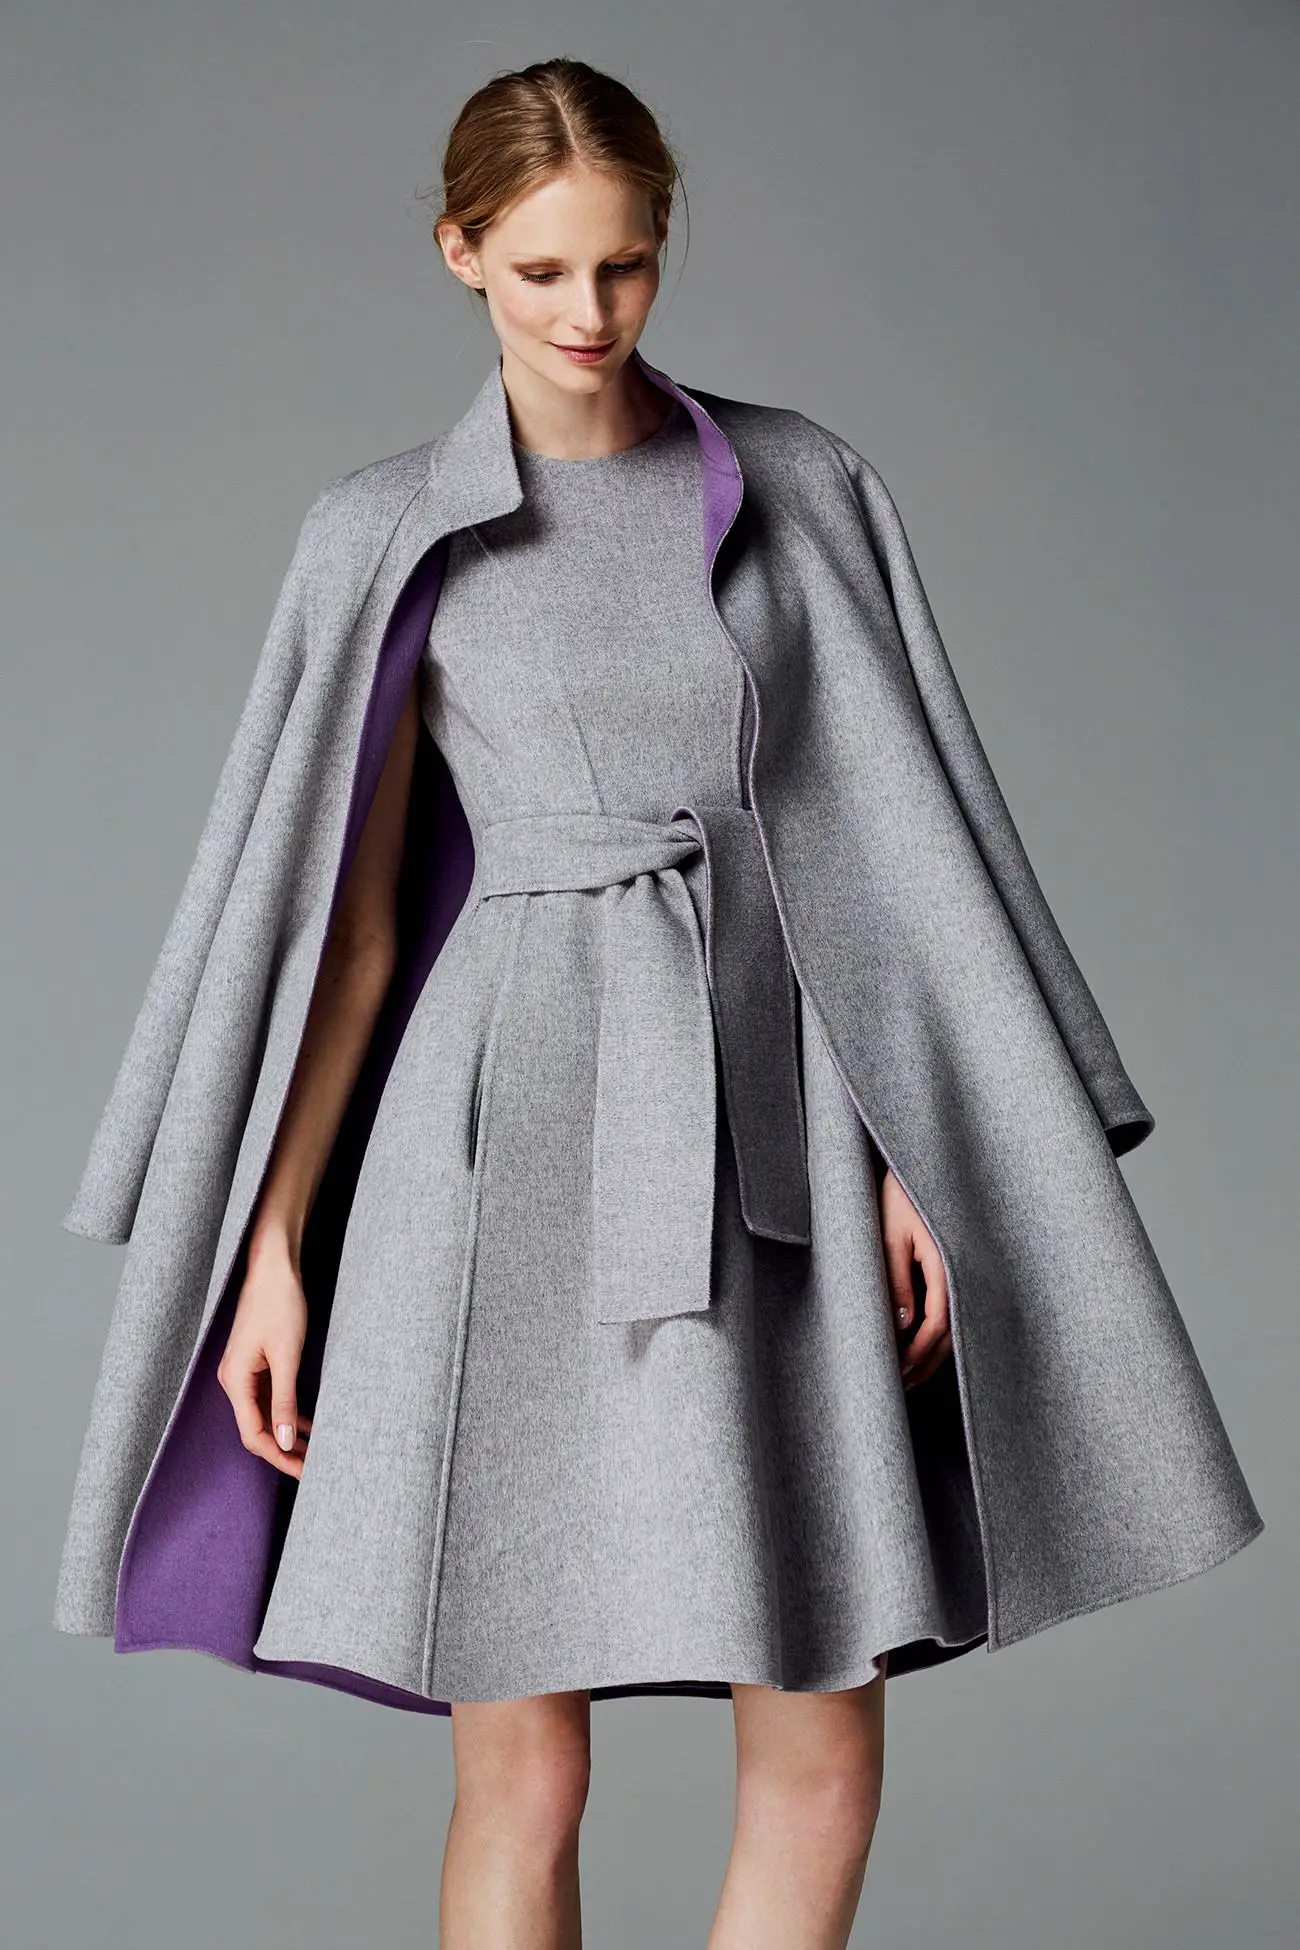 Carolina Herrera double wool gray-purple coat